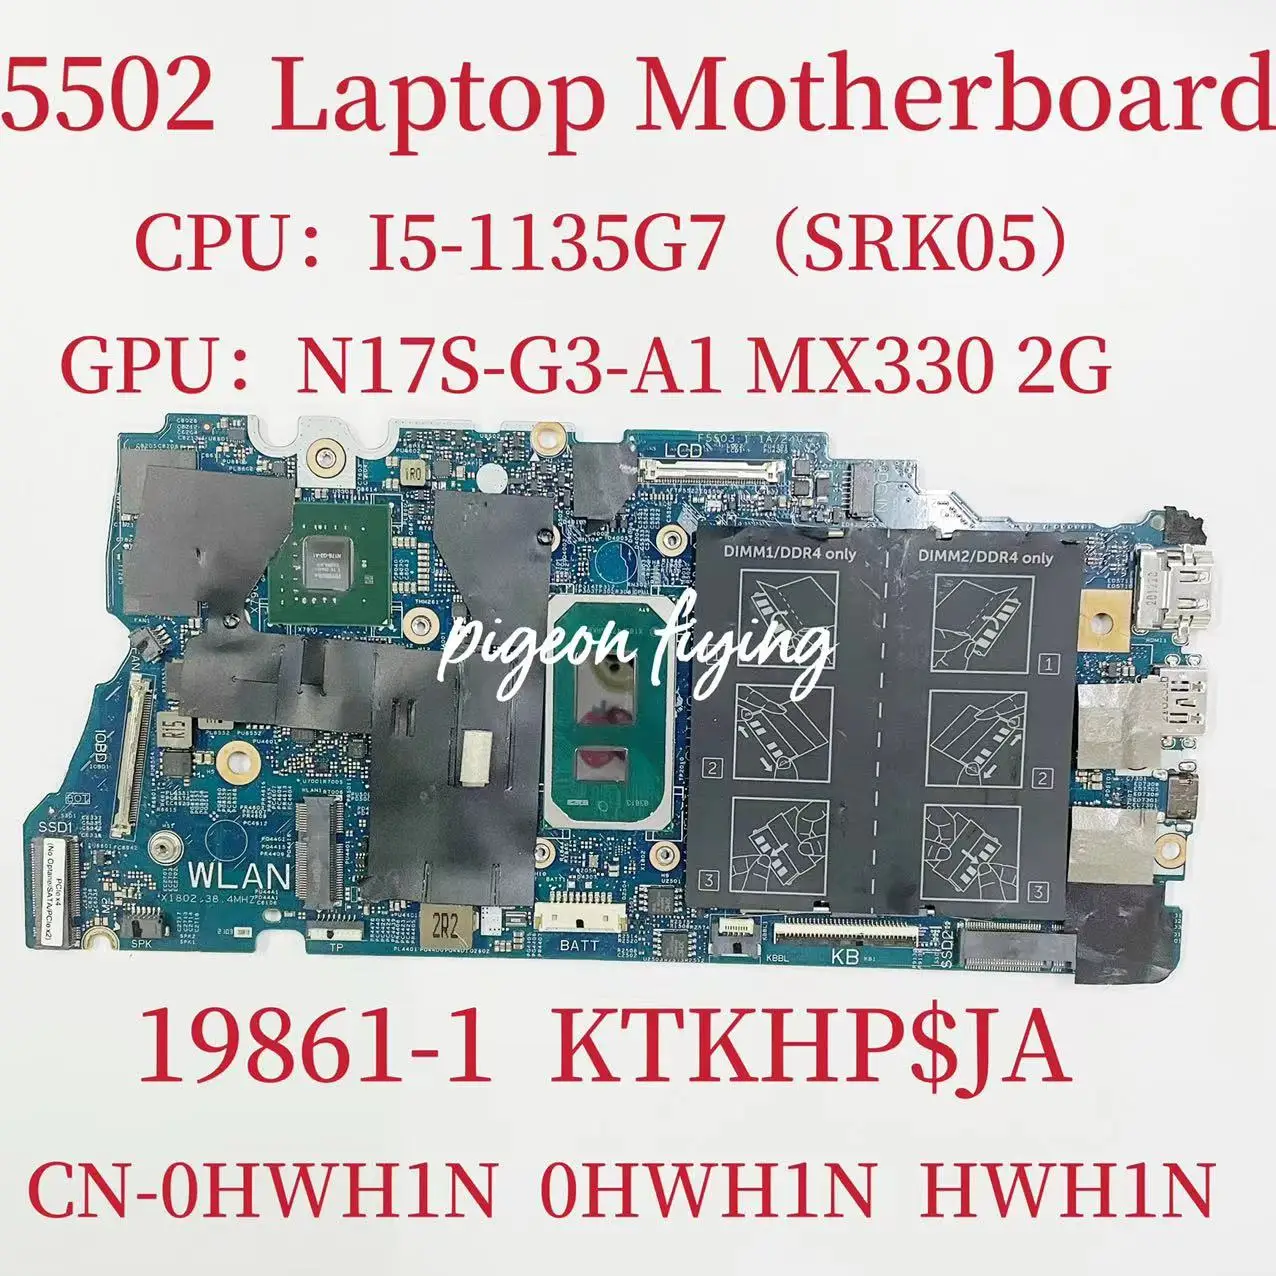 

CN-0MTYV1 0MTYV1 MTYV1 Mainboard 19861-1 For Dell Inspiron 15 5502 Laptop Motherboard SRK02 i7-1165G7 CPU MX330 2G GPU Test OK